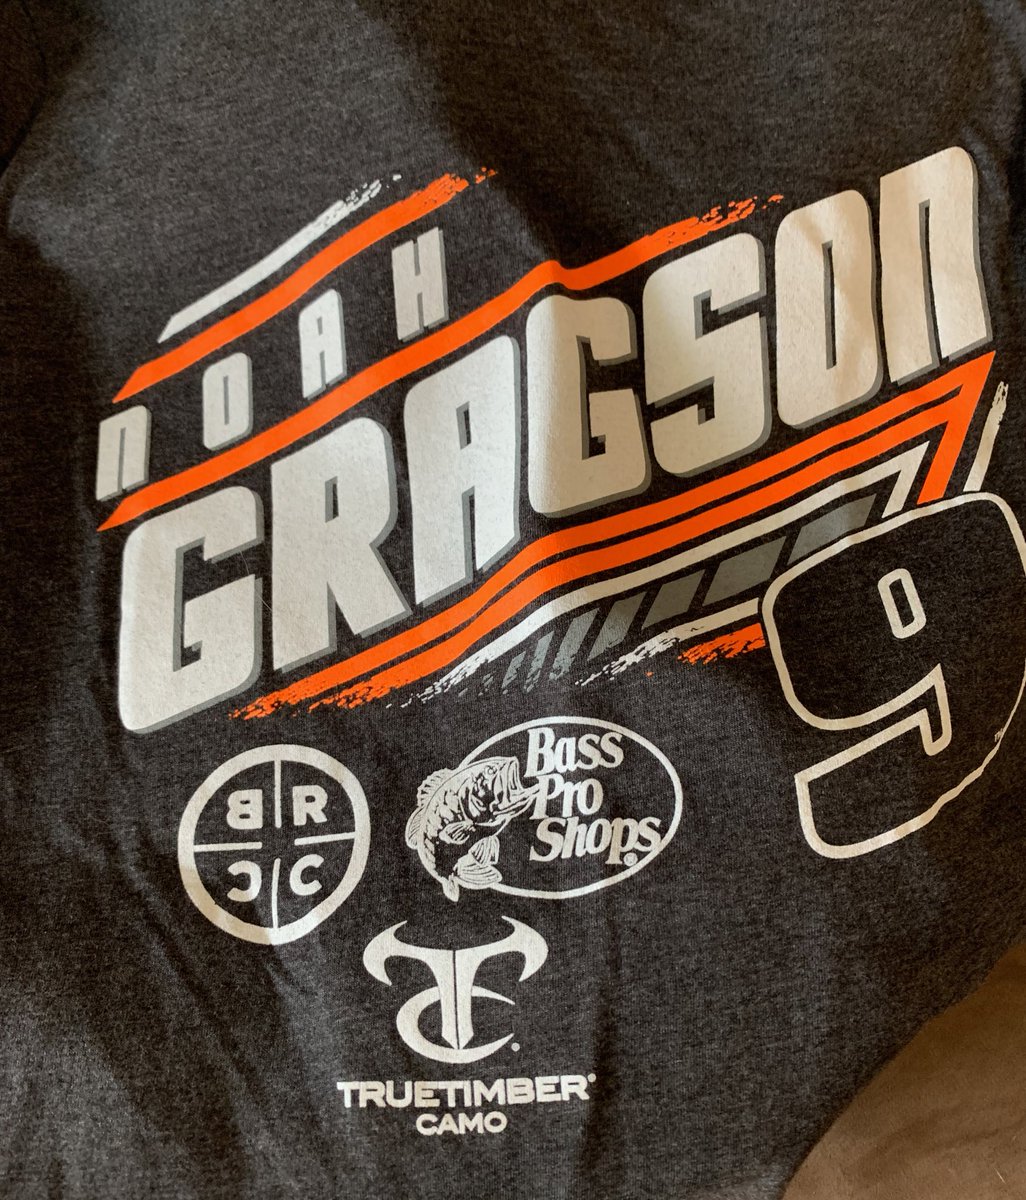 Got my new shirt in the mail today! ✊🏼👏🏼🔥 @NoahGragson #jrmotorsports #JRM #bassproshops #truetimbercamo #blackriflecoffeecompany #teamchevy